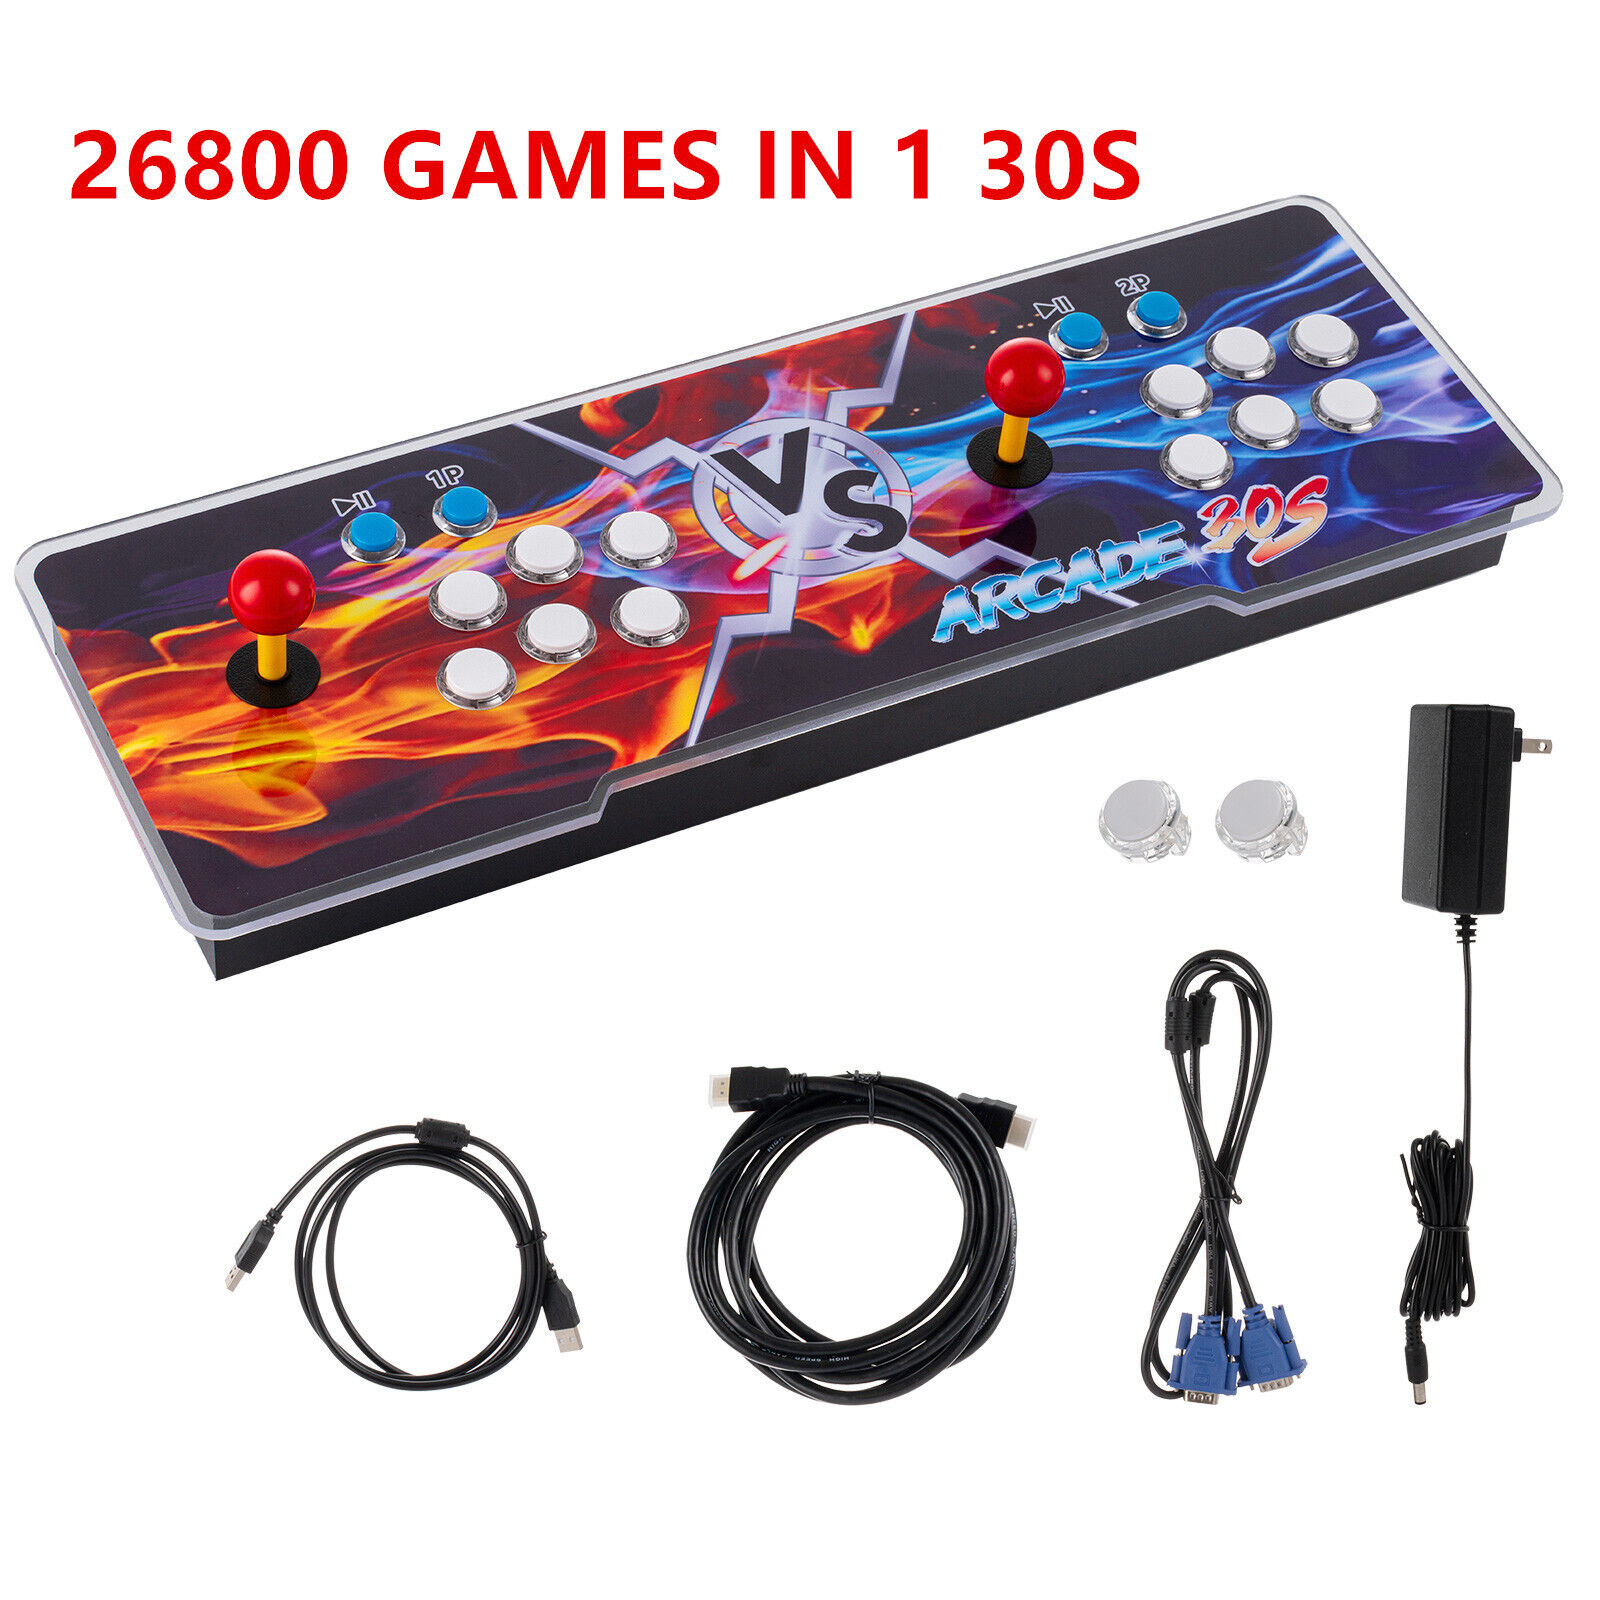 26800 in 1 Pandora Box 30S 3D+2D Retro Video Games Double Stick Arcade Console